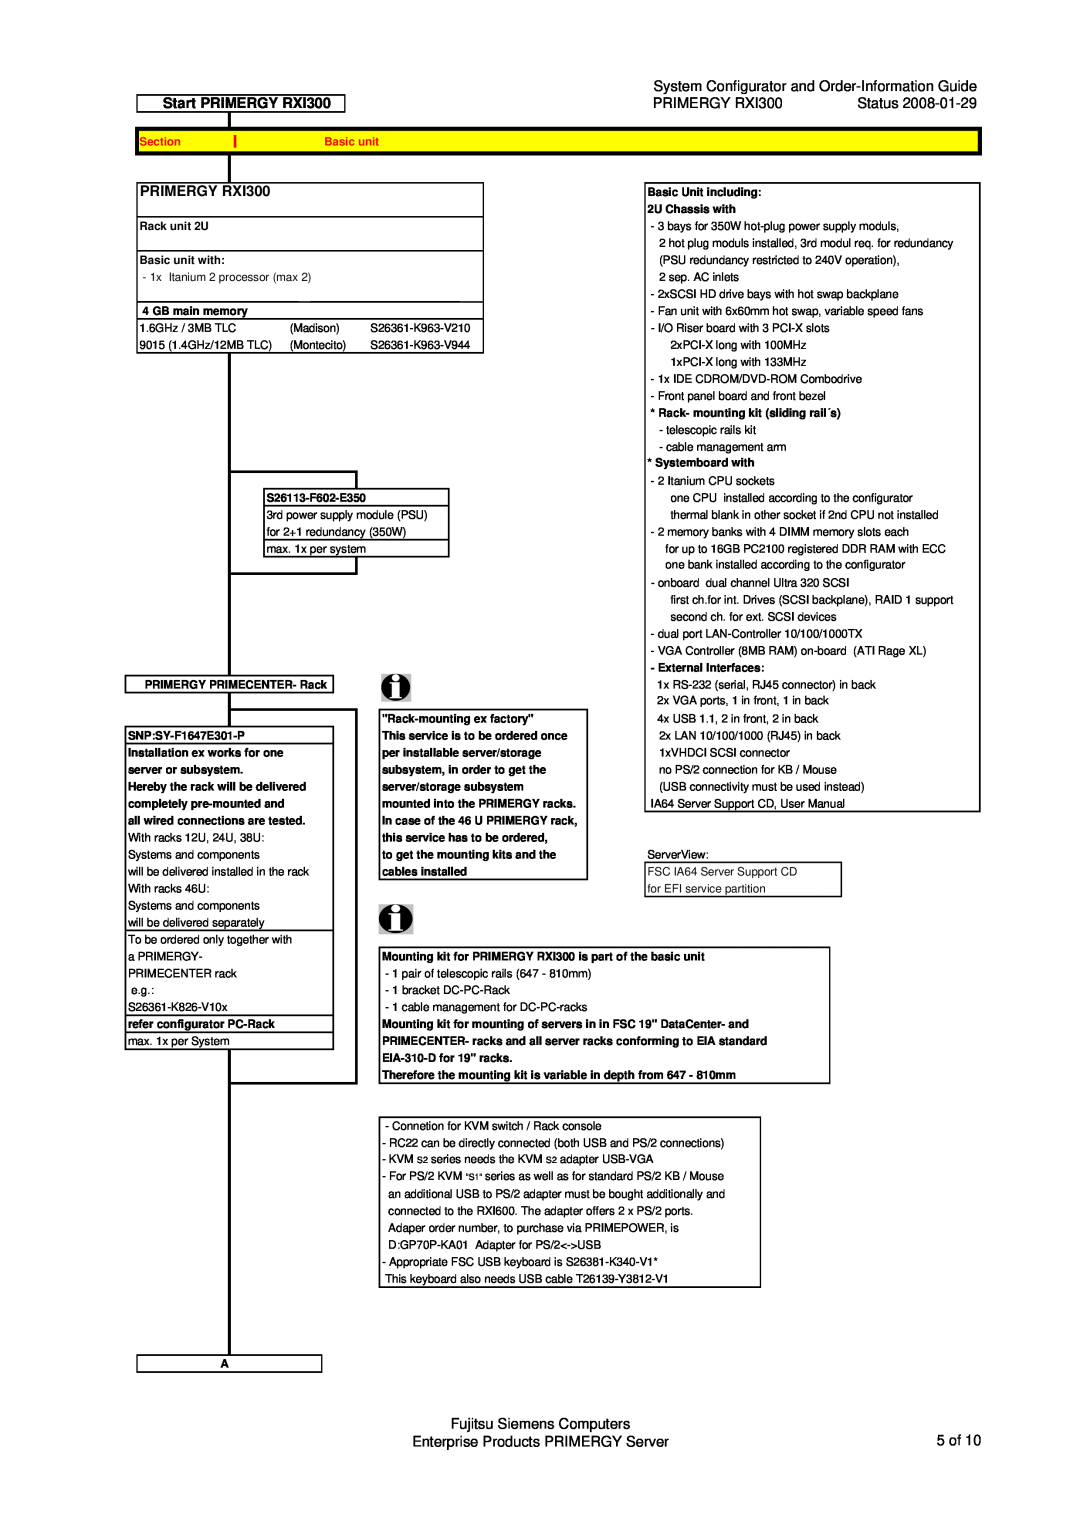 Fujitsu manual System Configurator and Order-Information Guide, PRIMERGY RXI300, Fujitsu Siemens Computers, Status, 5 of 